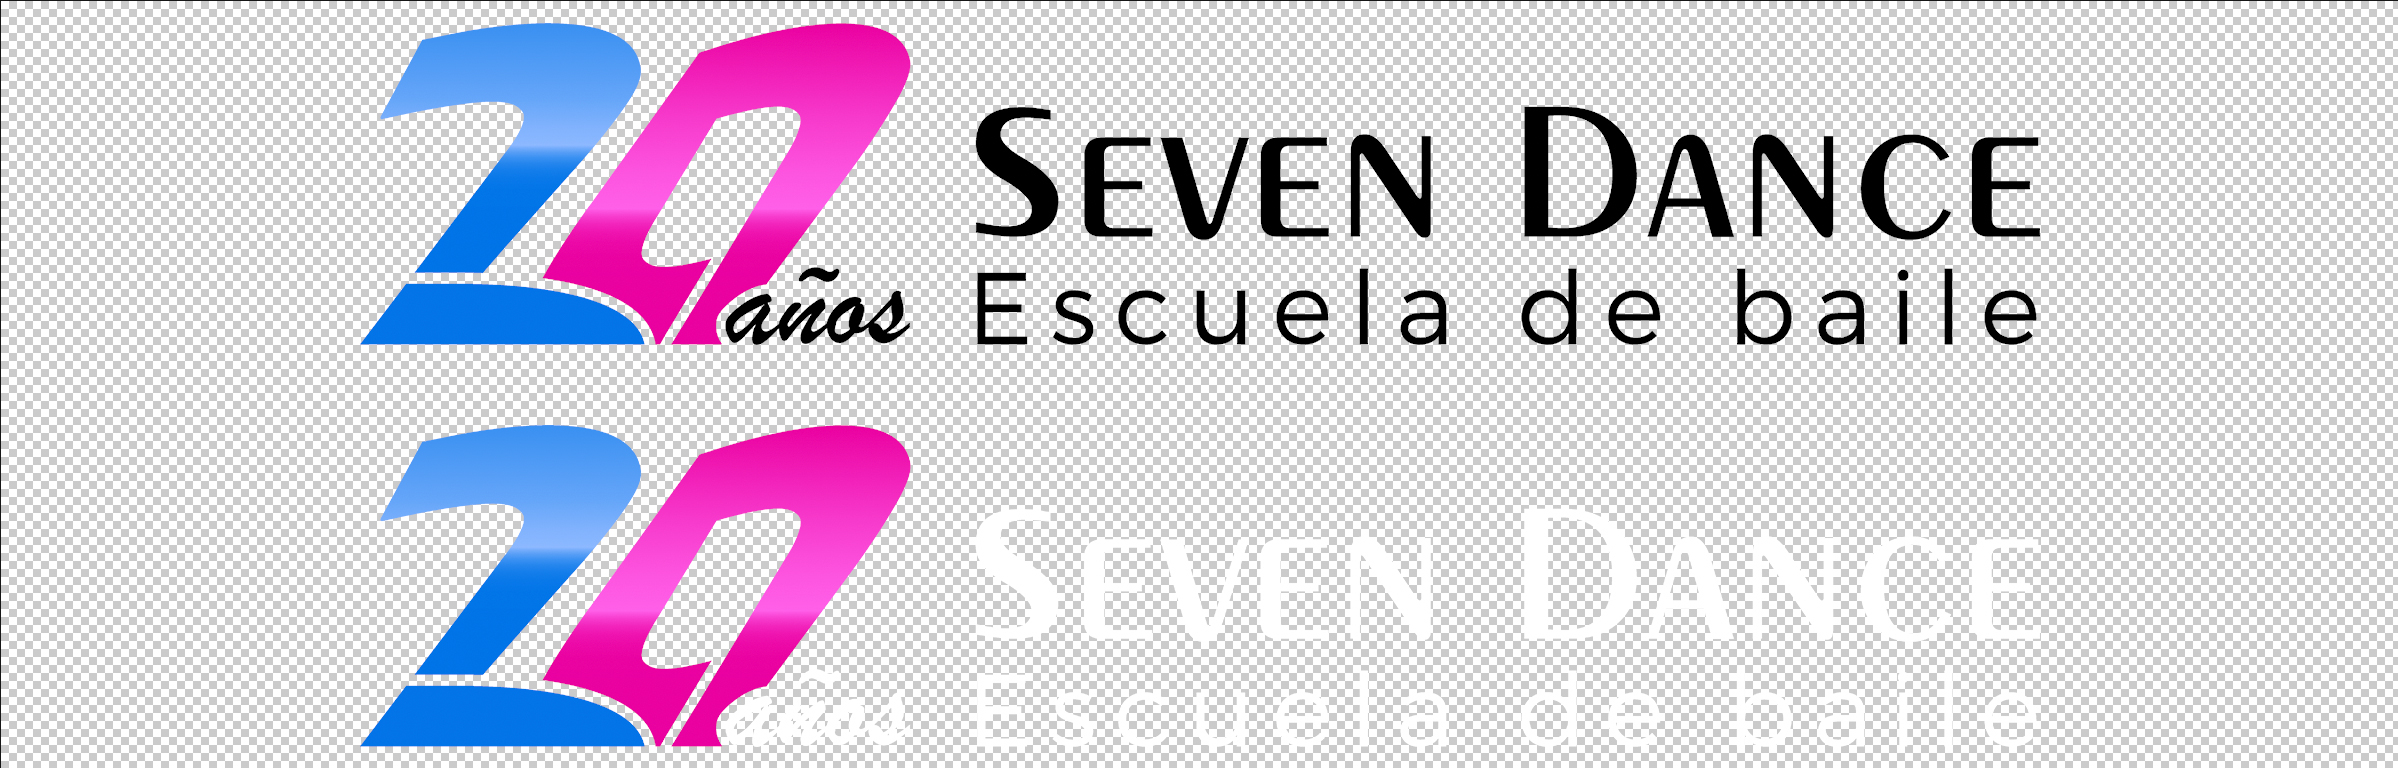 Logo horizontal 20años Seven Dance escuela de baile